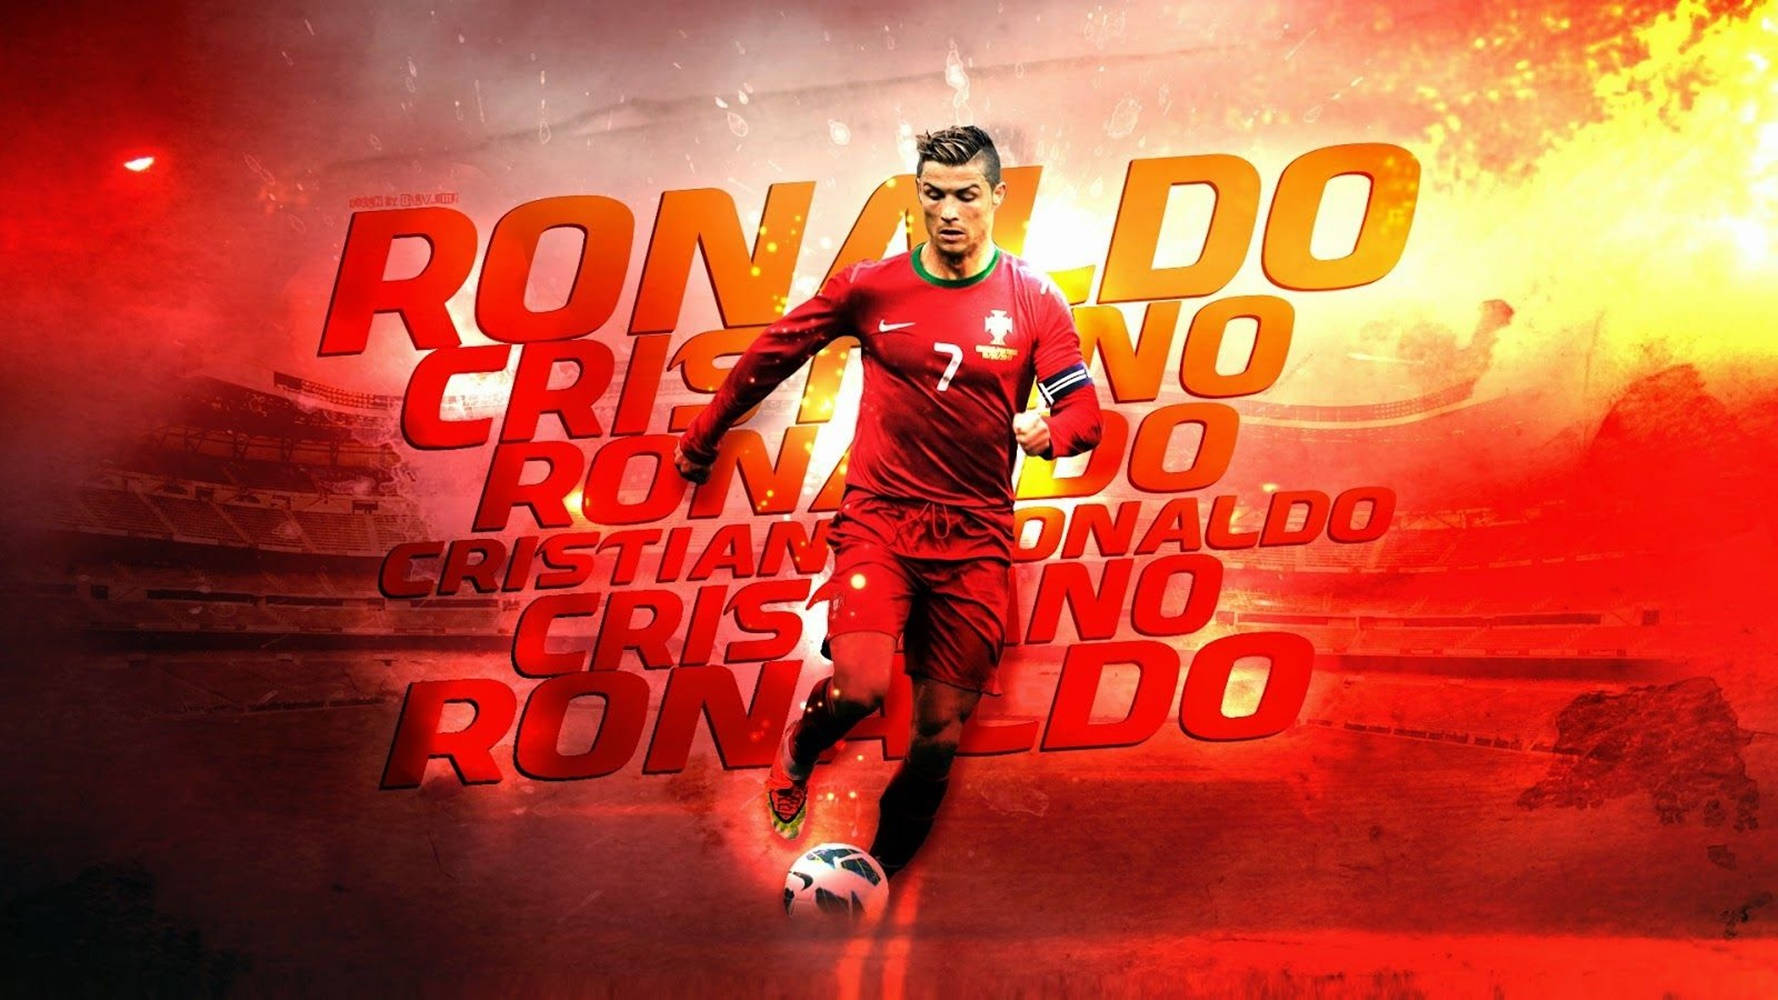 Cristiano Ronaldo Cool Fiery Red Graphic Artwork Wallpaper